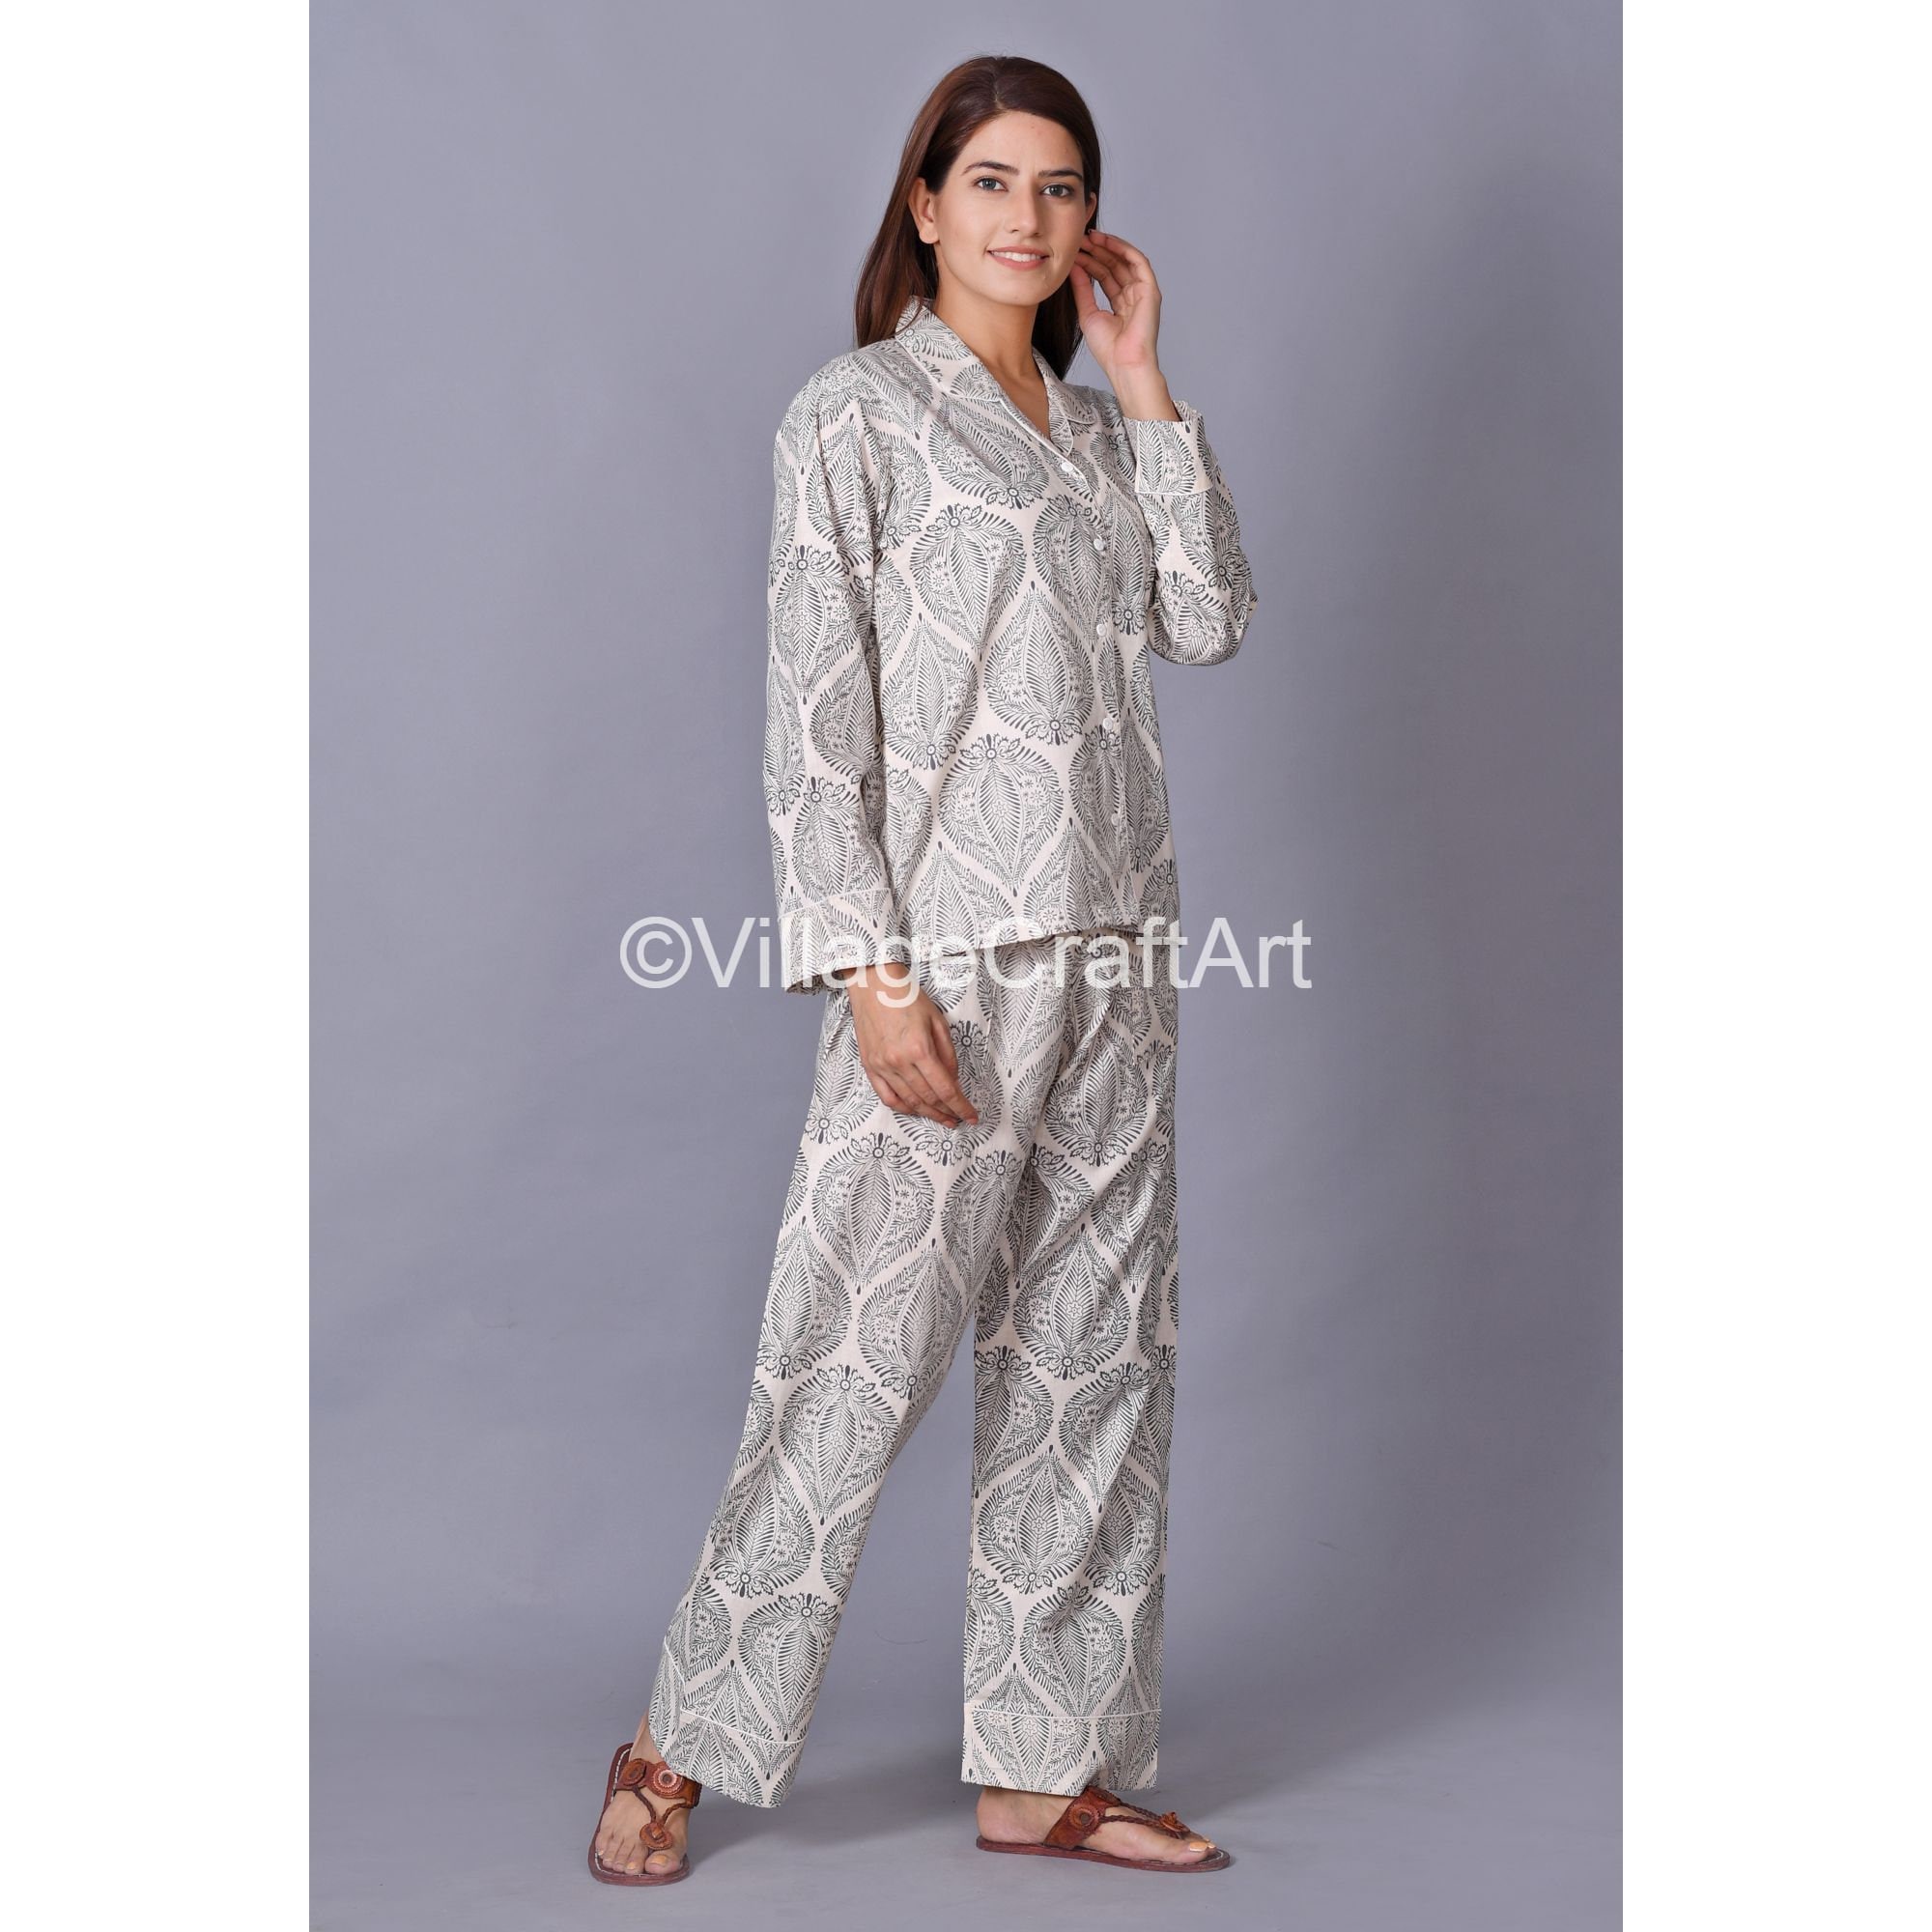 Kleding Dameskleding Pyjamas & Badjassen Sets Kerstcadeau voor Haar Kies Joy Women's Lounge Set Zachte Pyjama Faith Lounge Set 